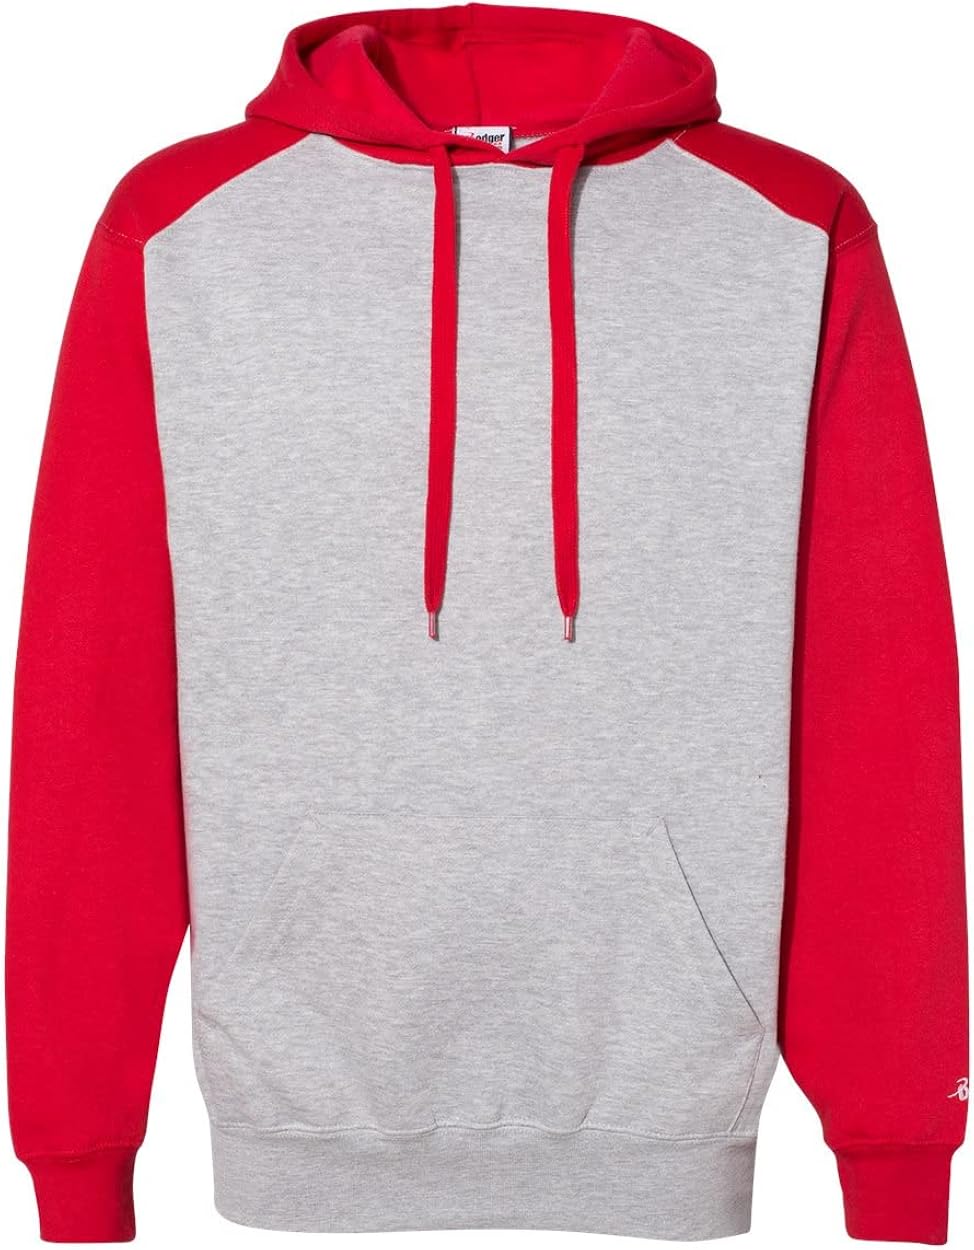 Badger Mens Sport Athletic Fleece Hooded Sweatshirt 1249 -OxfordRed -S